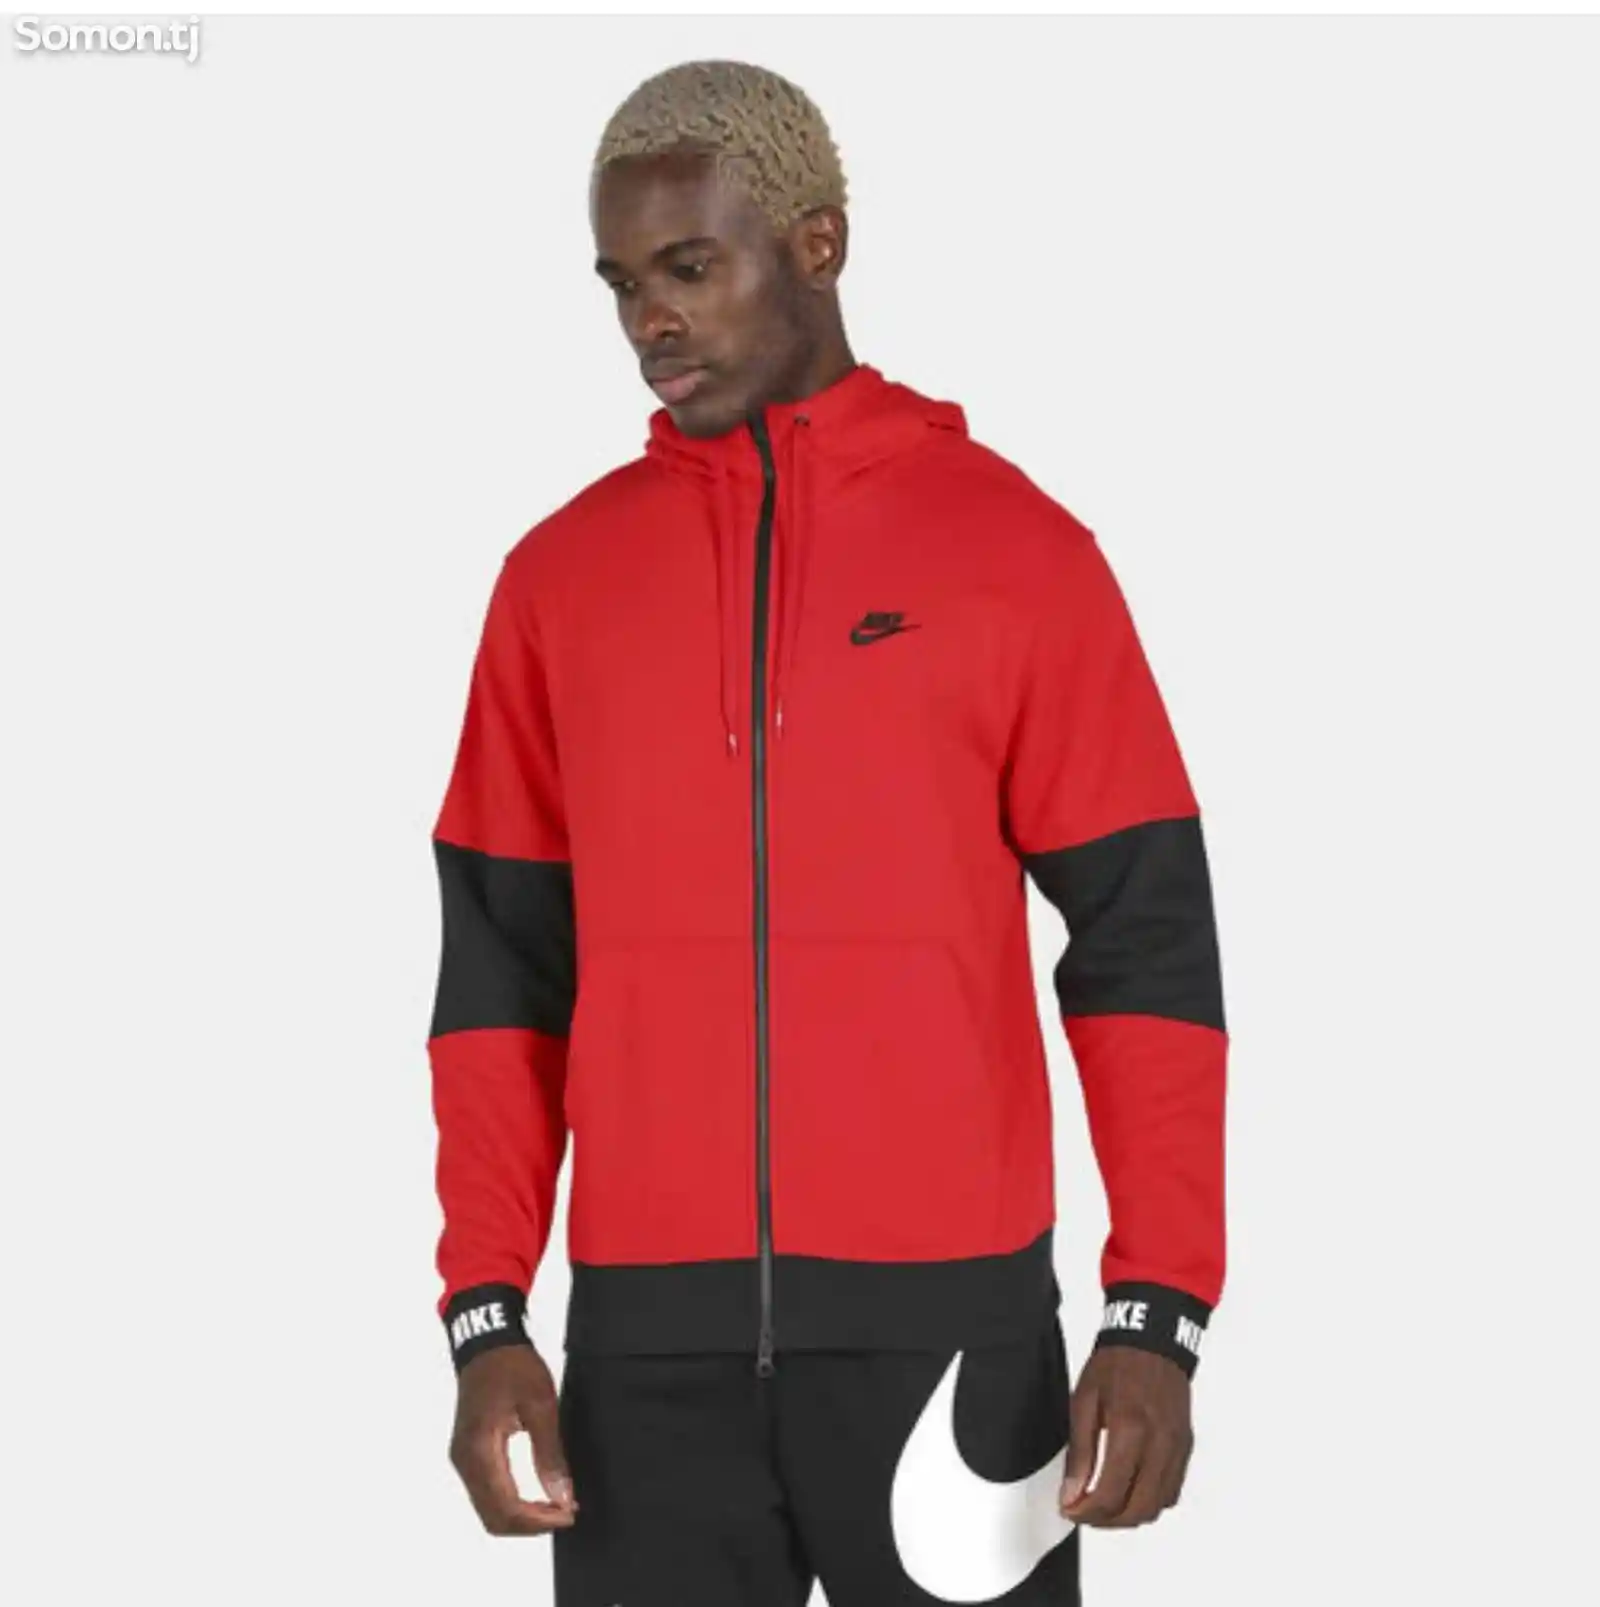 Спортивная мужская одежда Nike-3